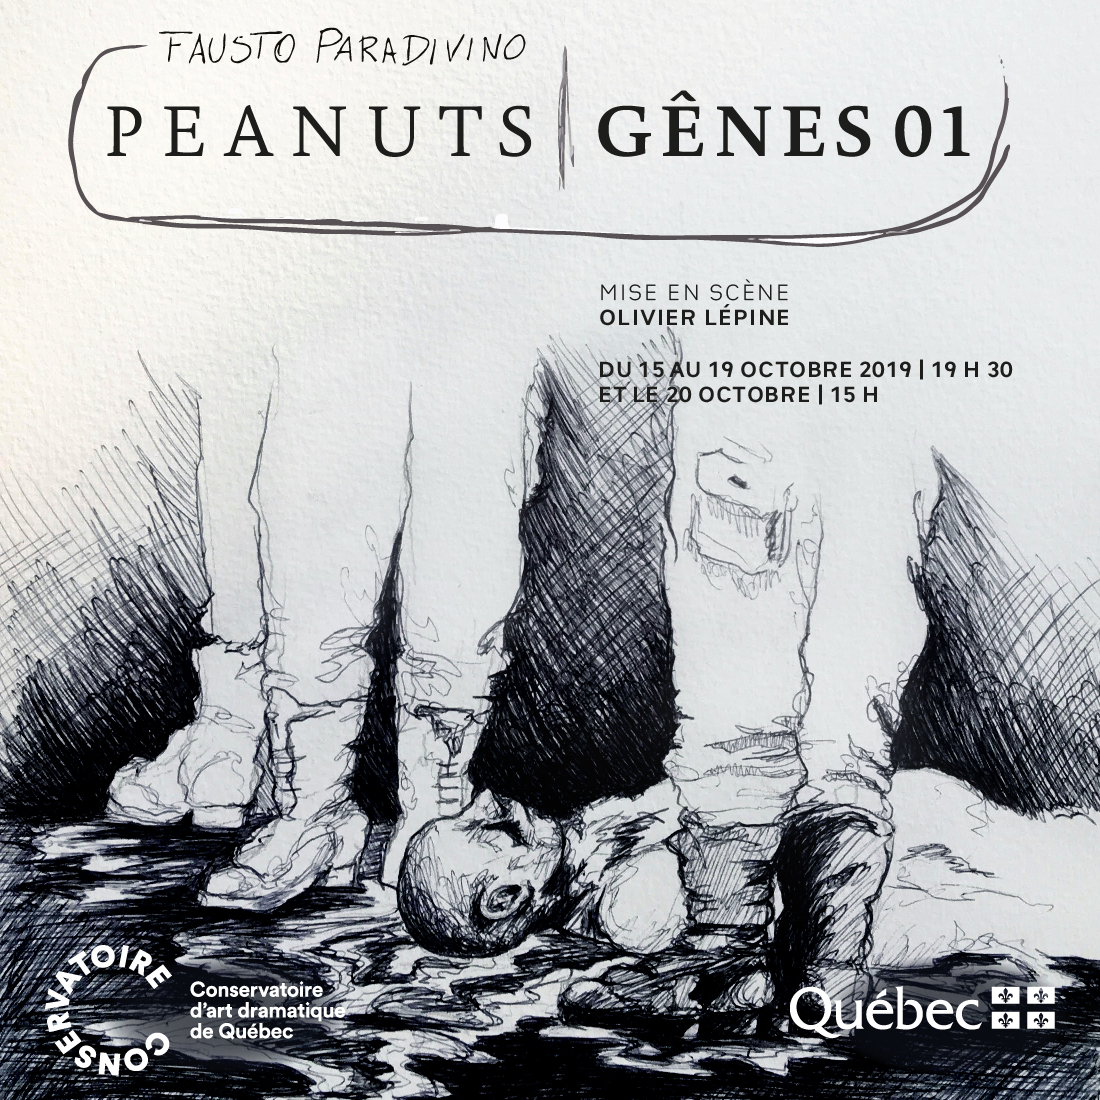 Peanuts | Gênes 01